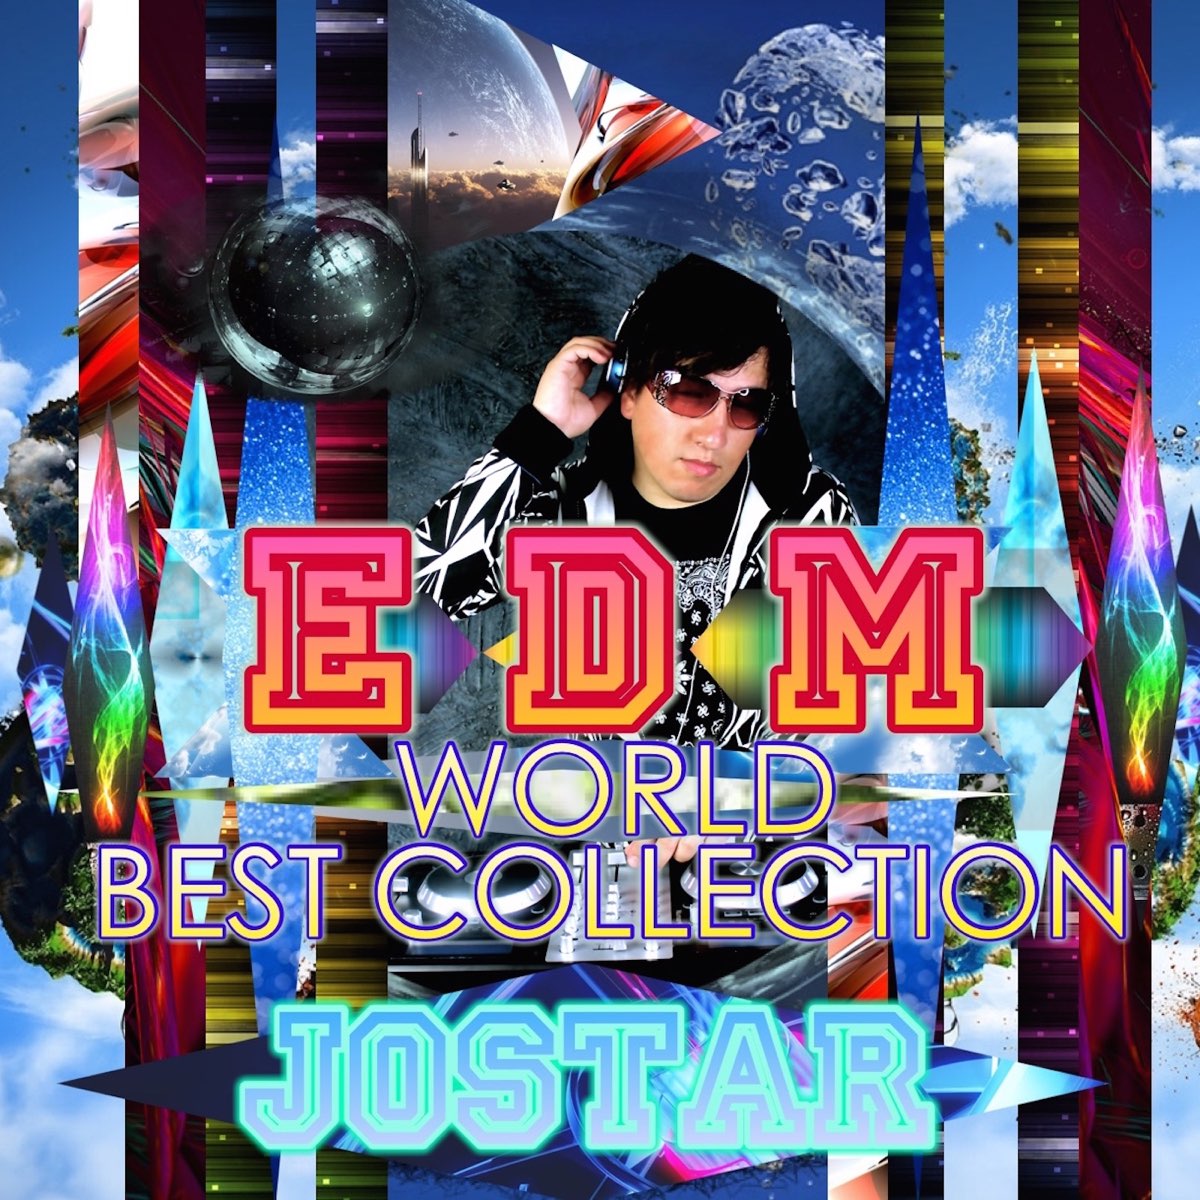 Ready go to ... https://itun.es/jp/VAvH- [ Edm Best World Collection by Jostar on Apple Music]